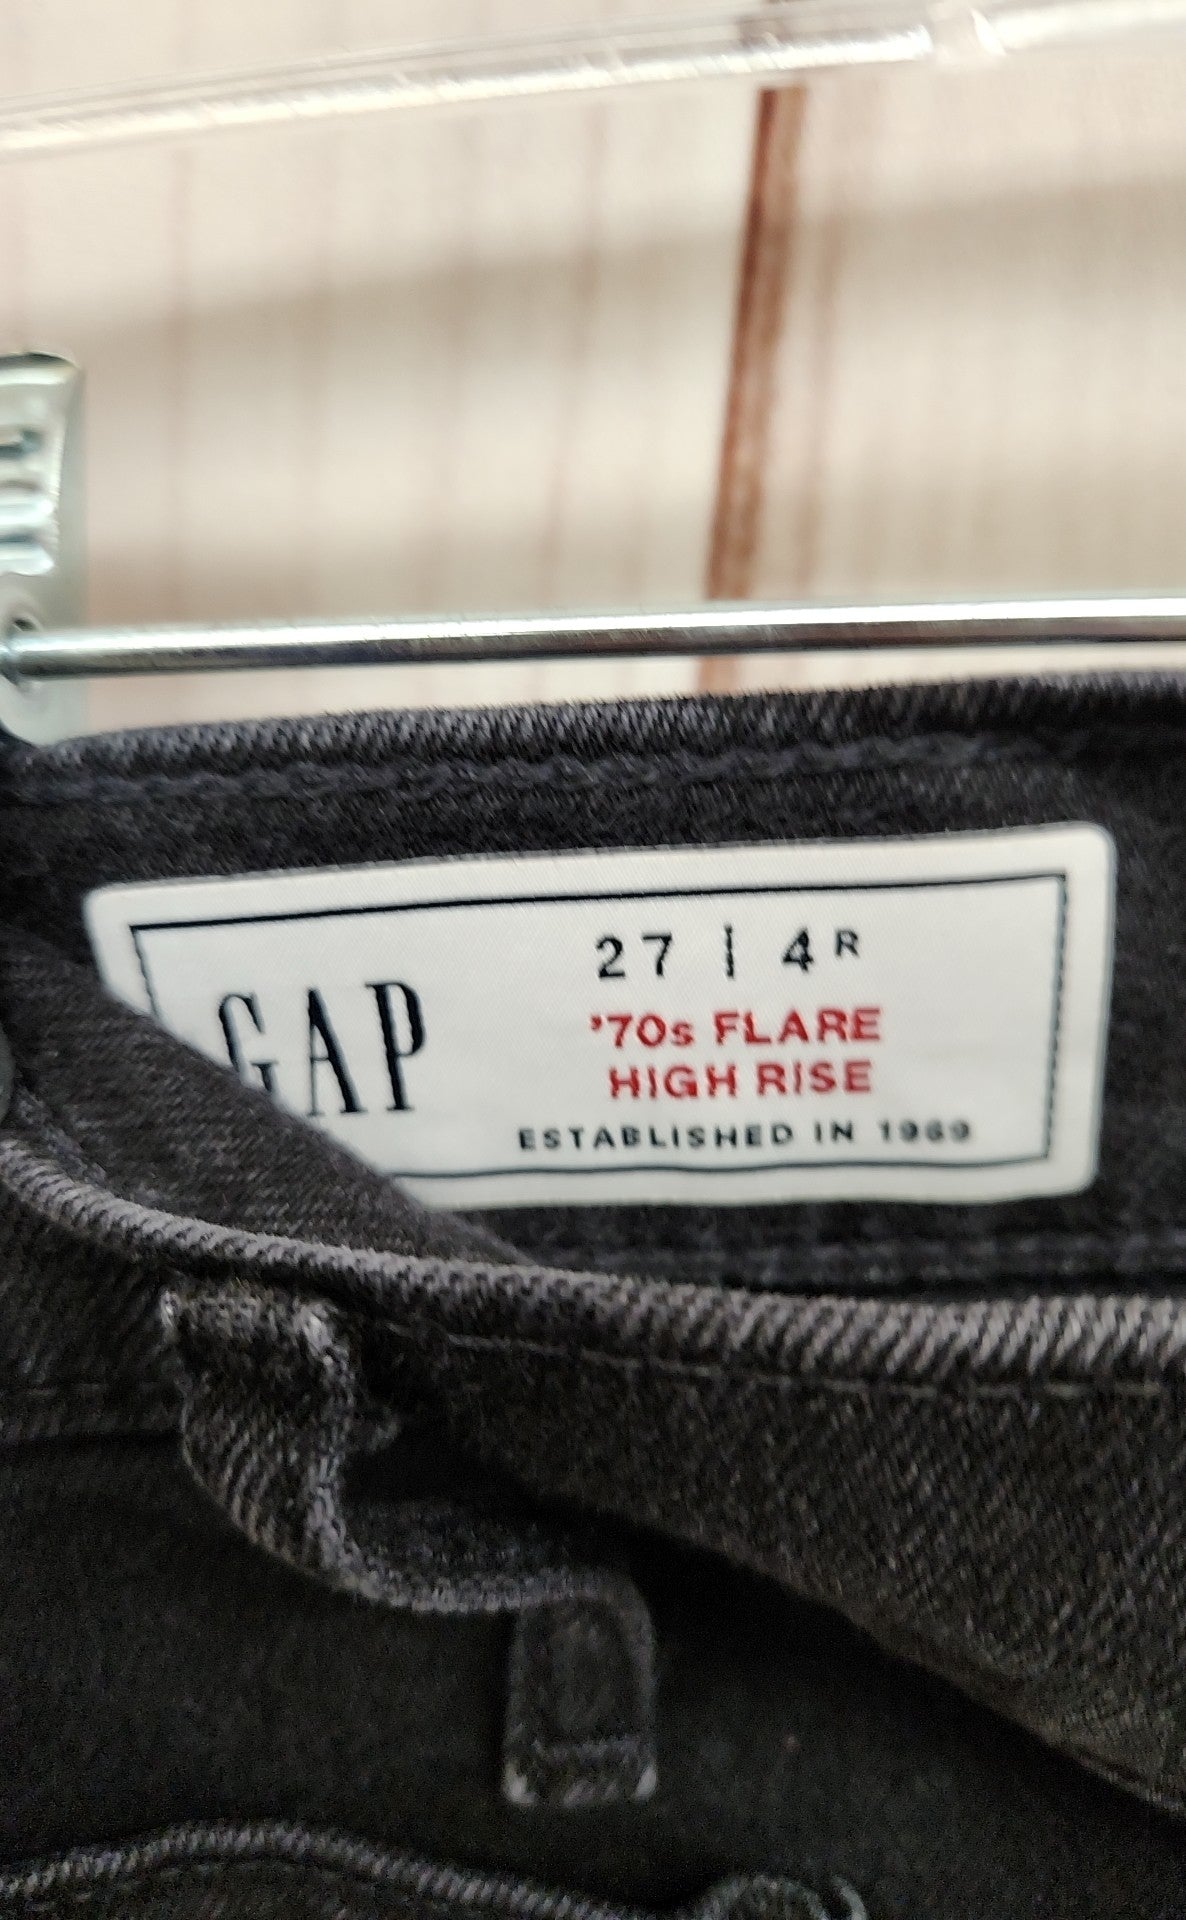 Gap Women's Size 27 (3-4) '70s Flare High Rise Black Jeans